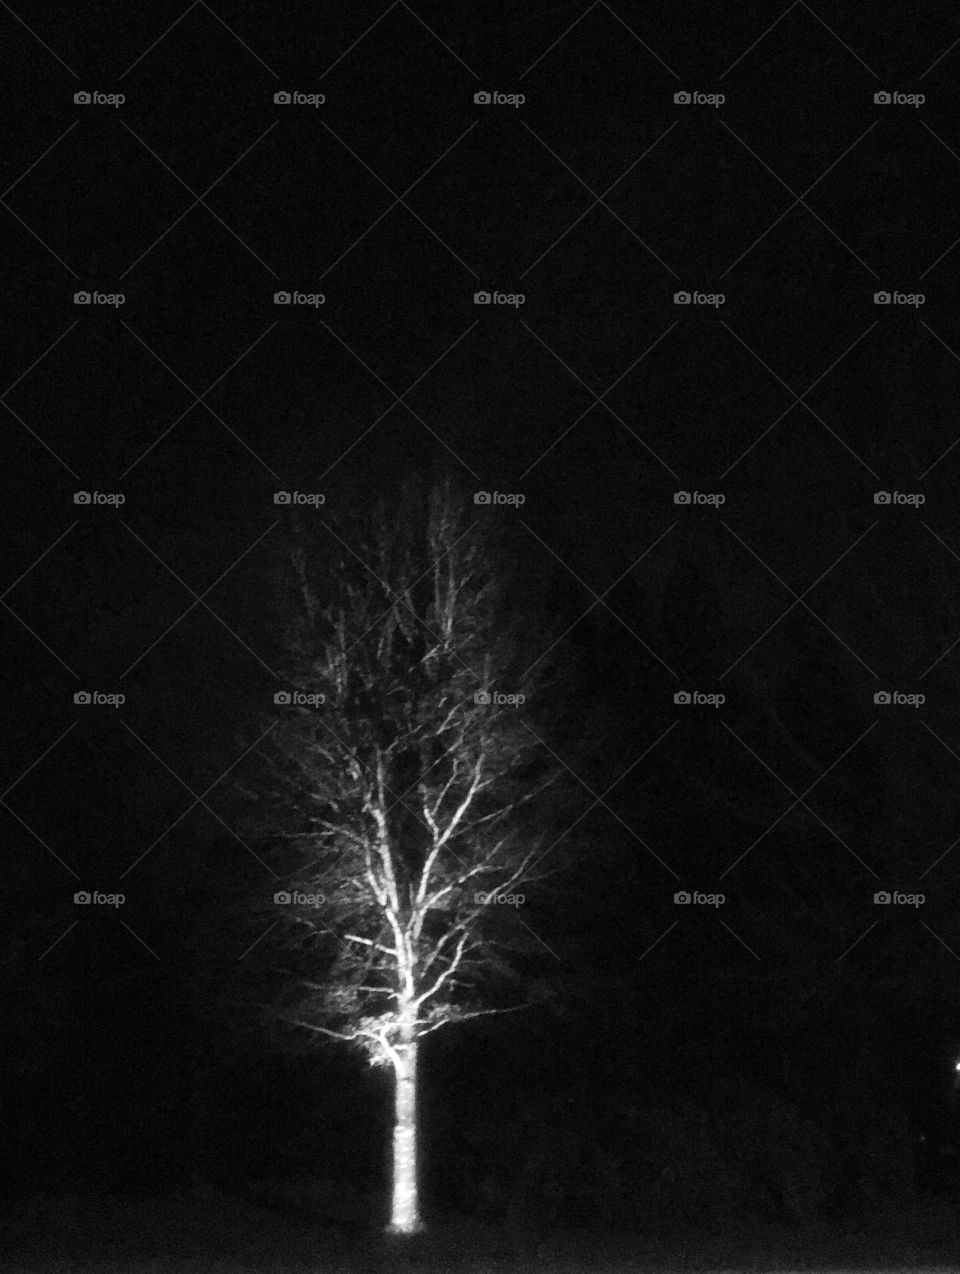 Under-lit tree